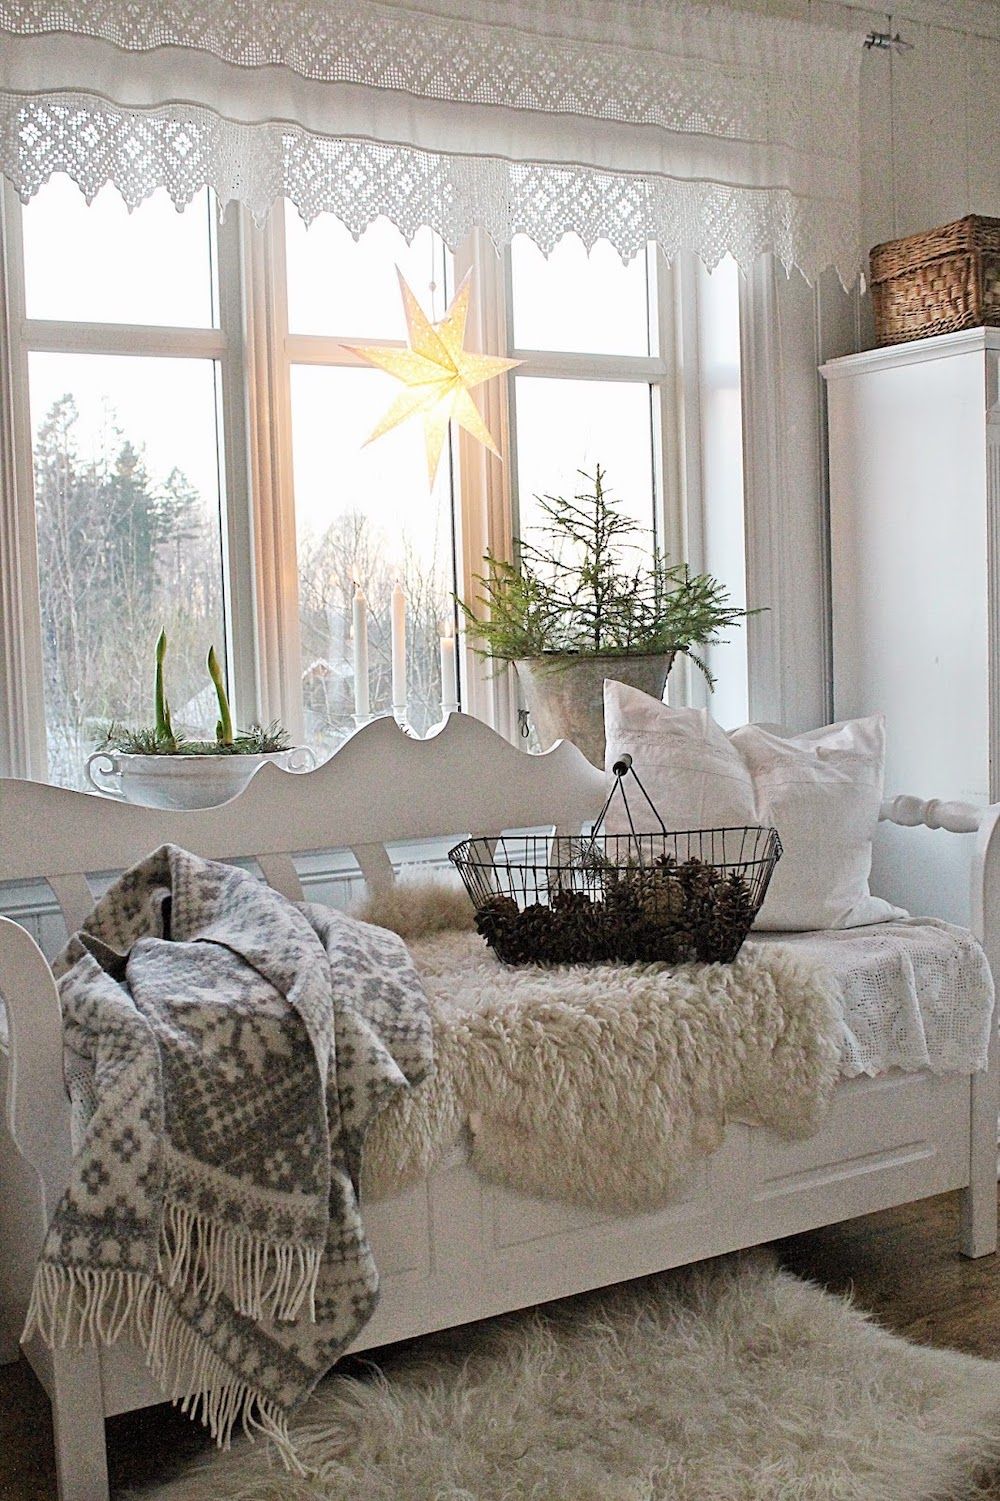 19 Winter Home Decor Ideas For A Cozy Space